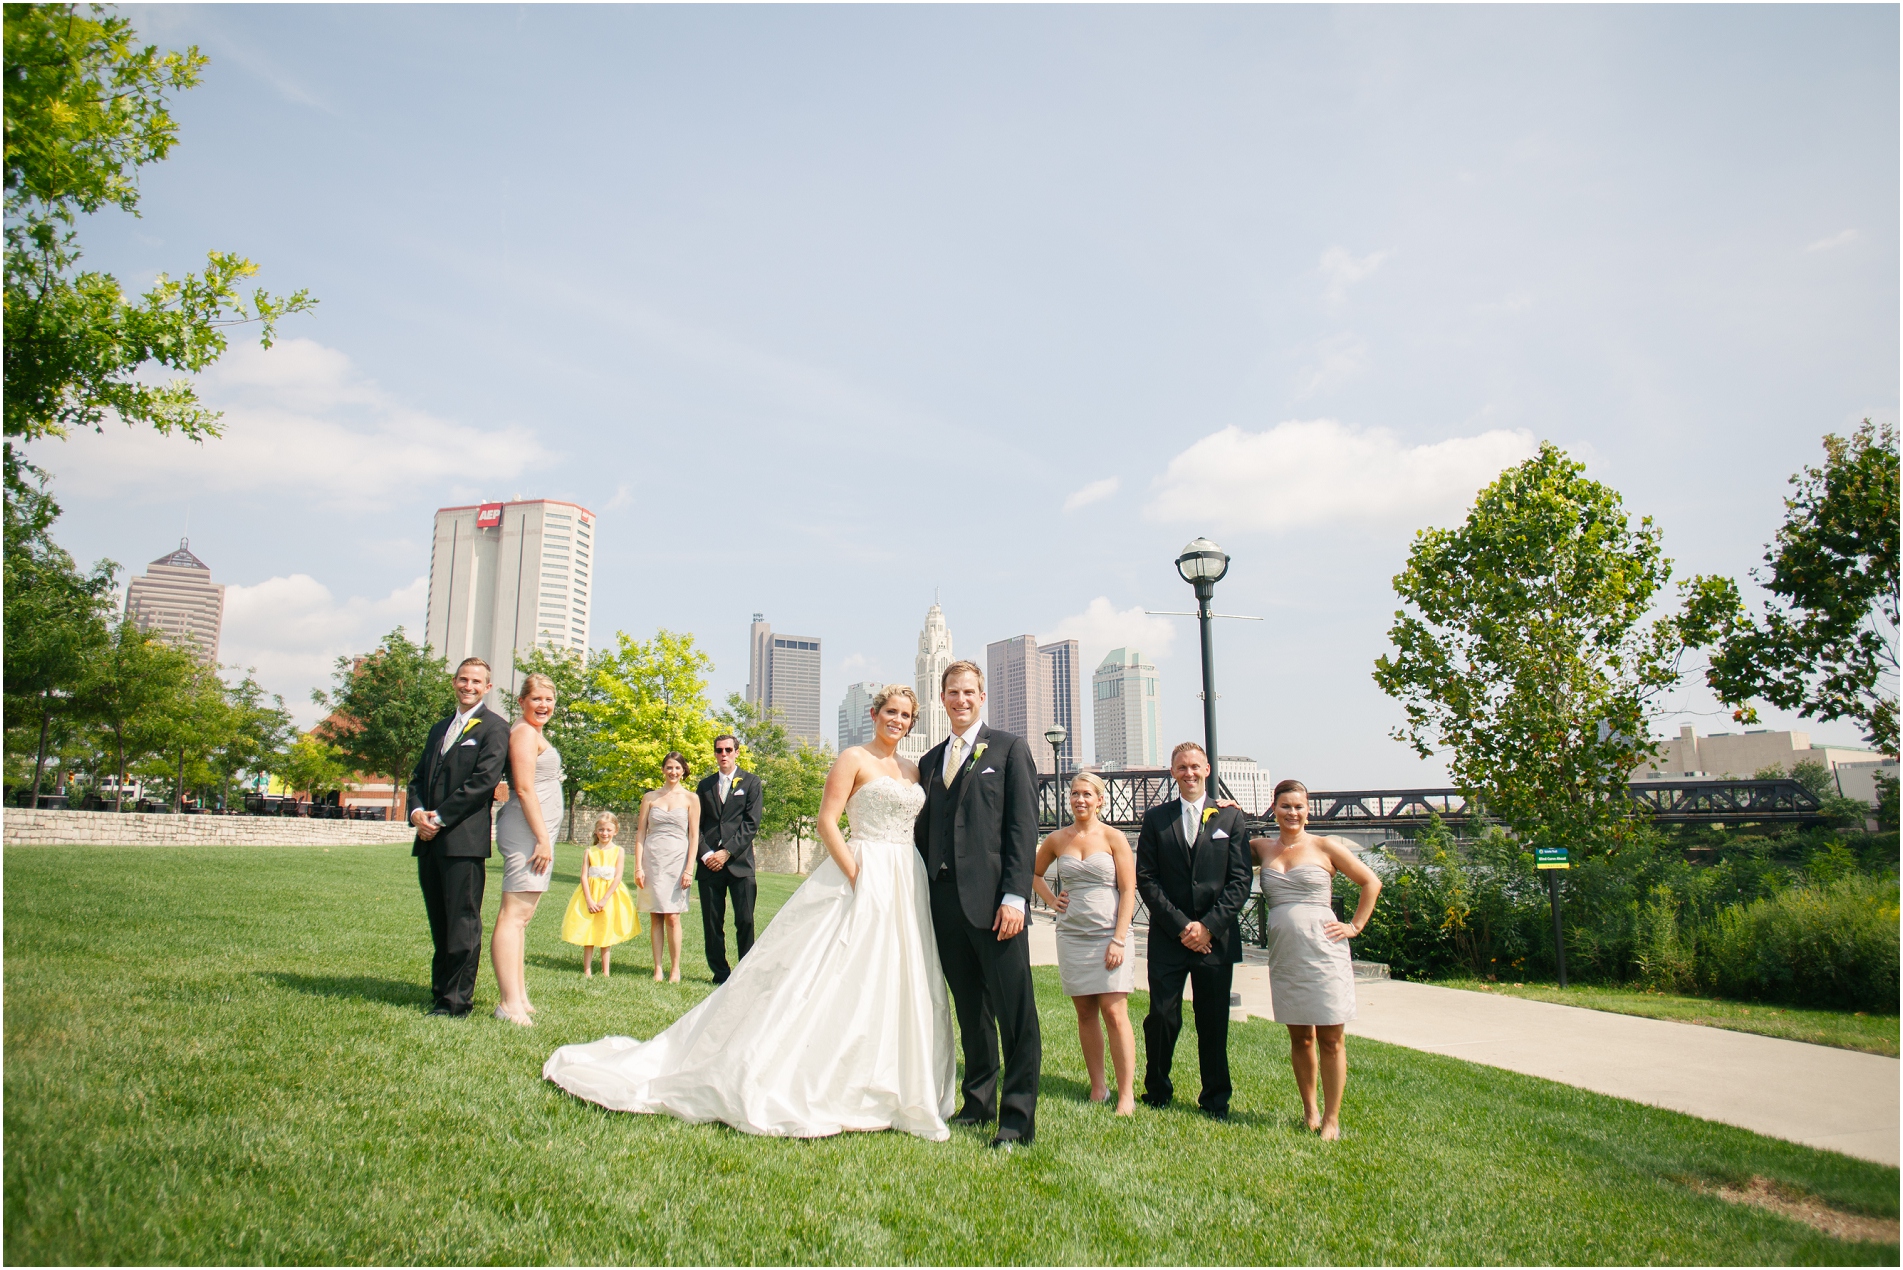 "Columbus Ohio Wedding"